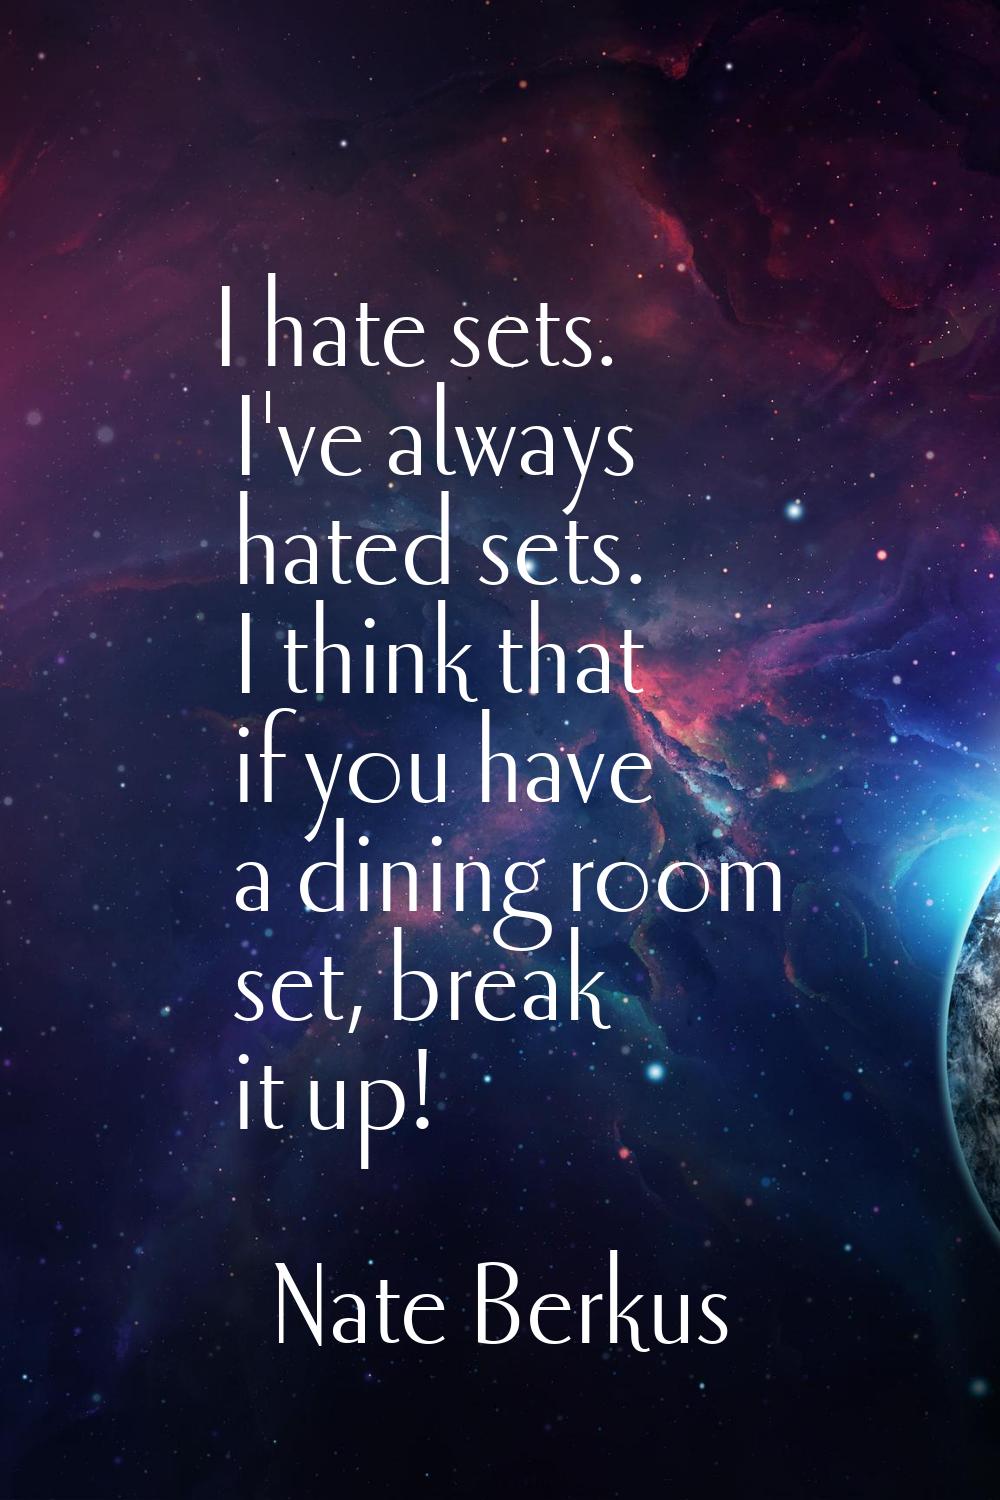 I hate sets. I've always hated sets. I think that if you have a dining room set, break it up!